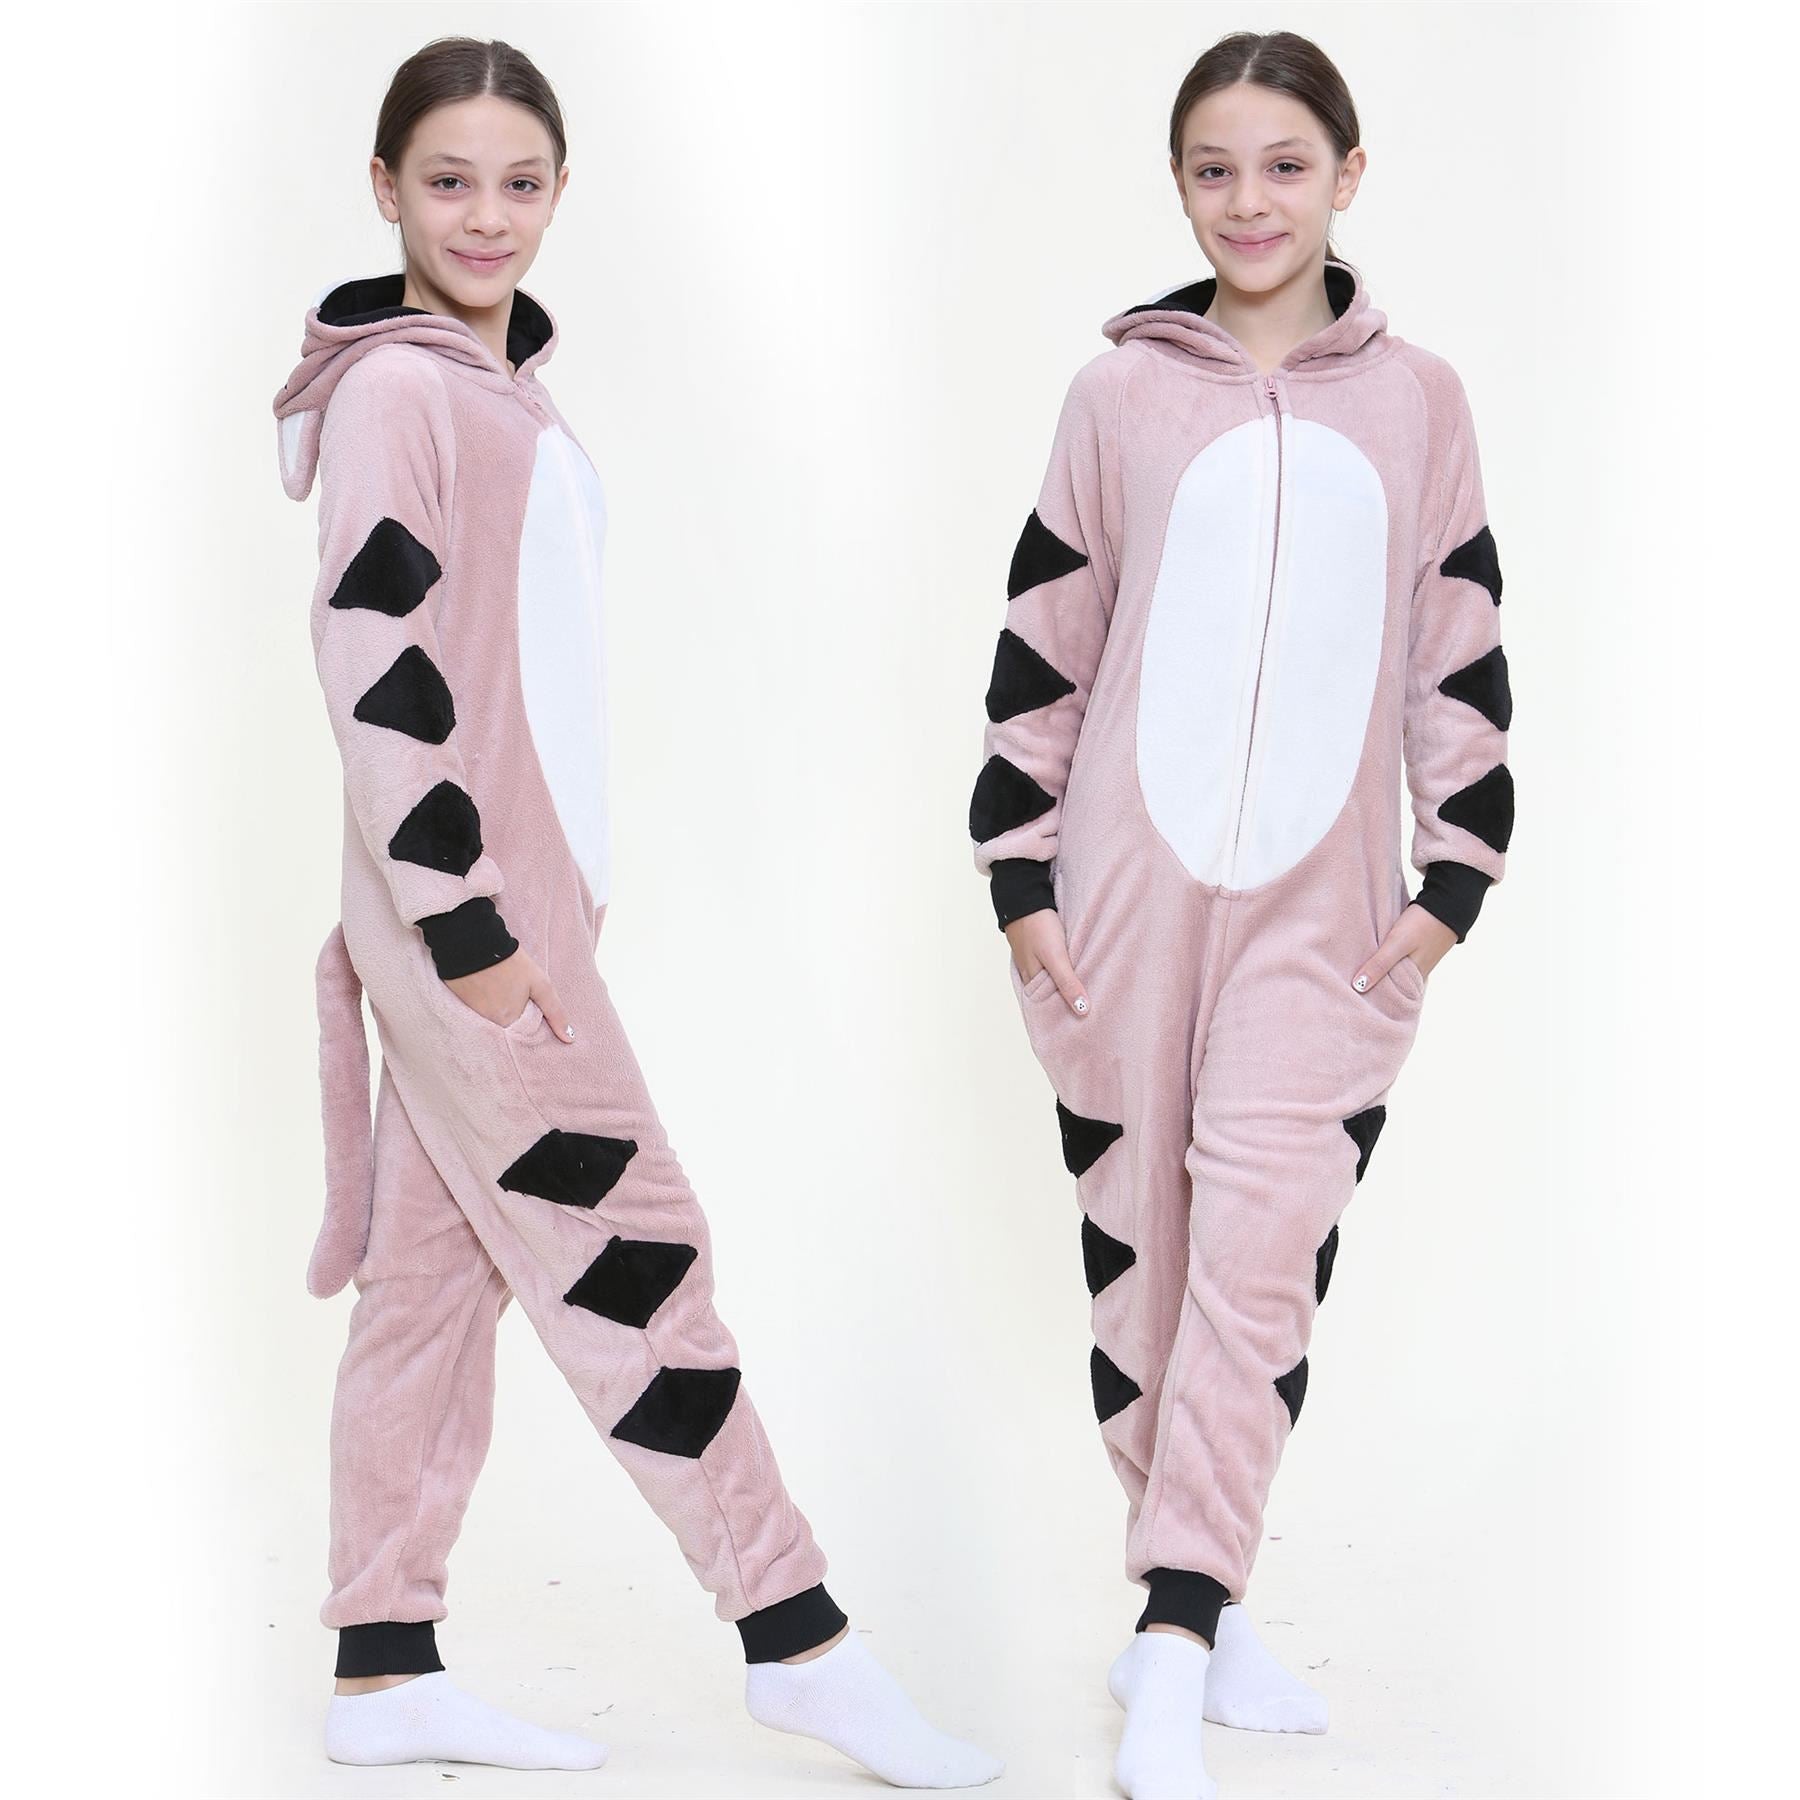 Kids Unisex Fleece A2Z Onesie One Piece World Book Day Costume Pink Cat Pyjamas